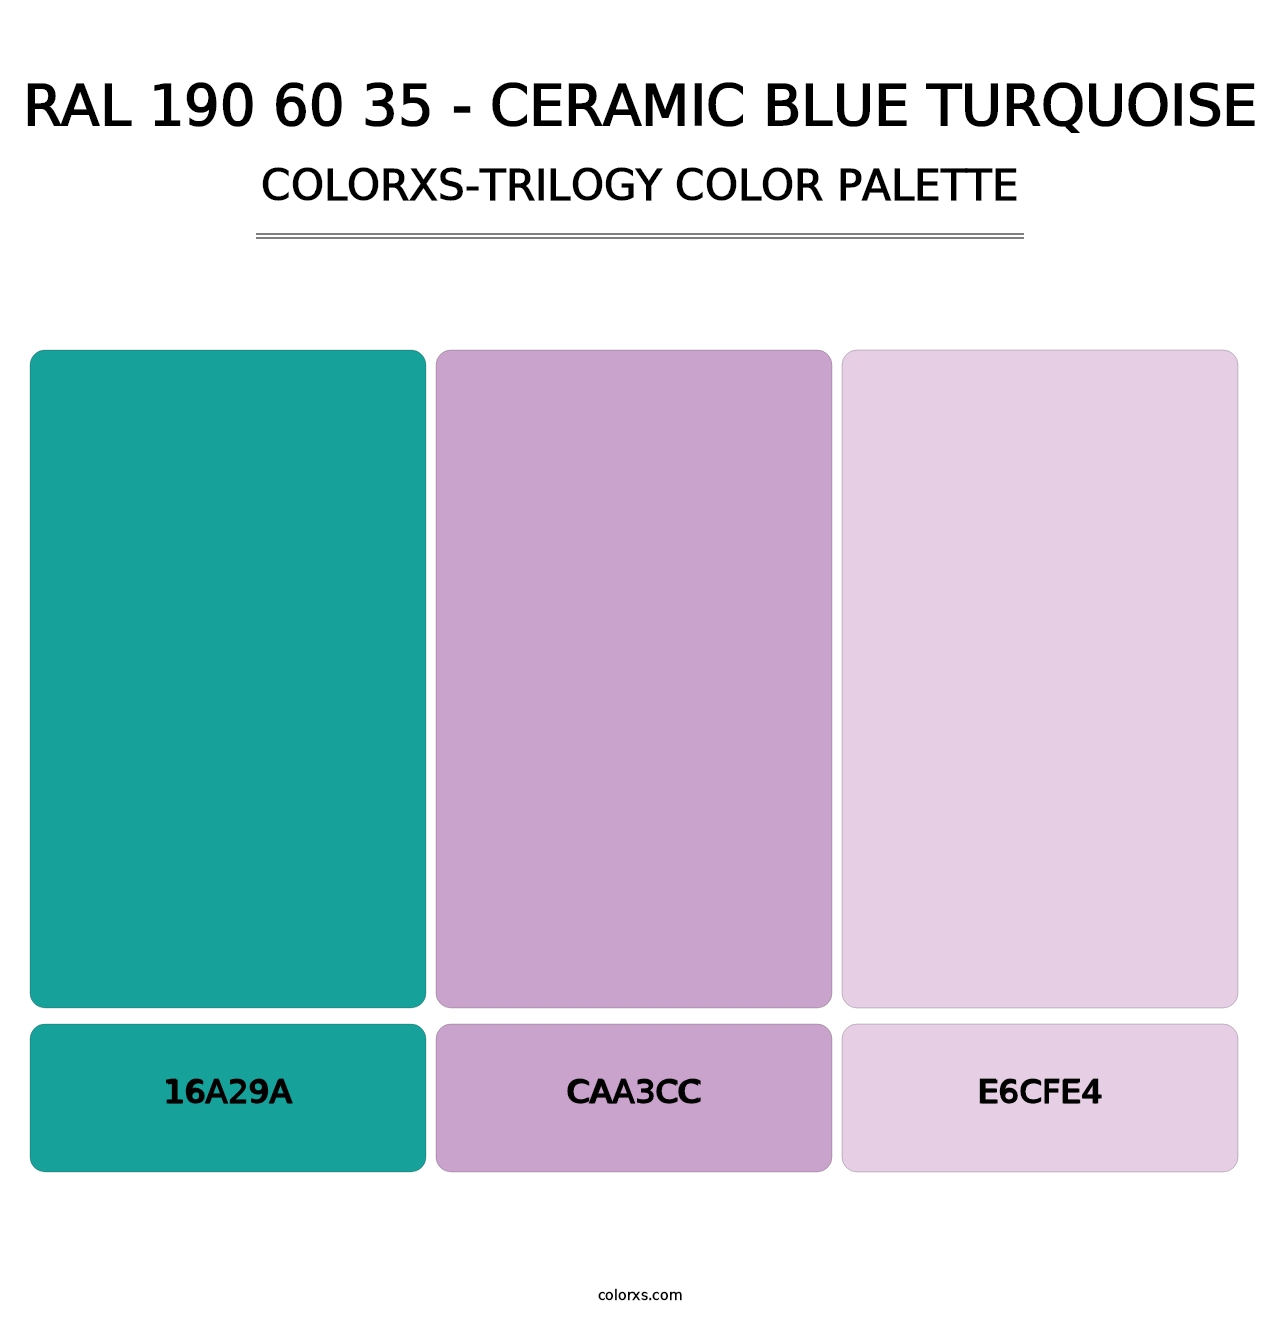 RAL 190 60 35 - Ceramic Blue Turquoise - Colorxs Trilogy Palette